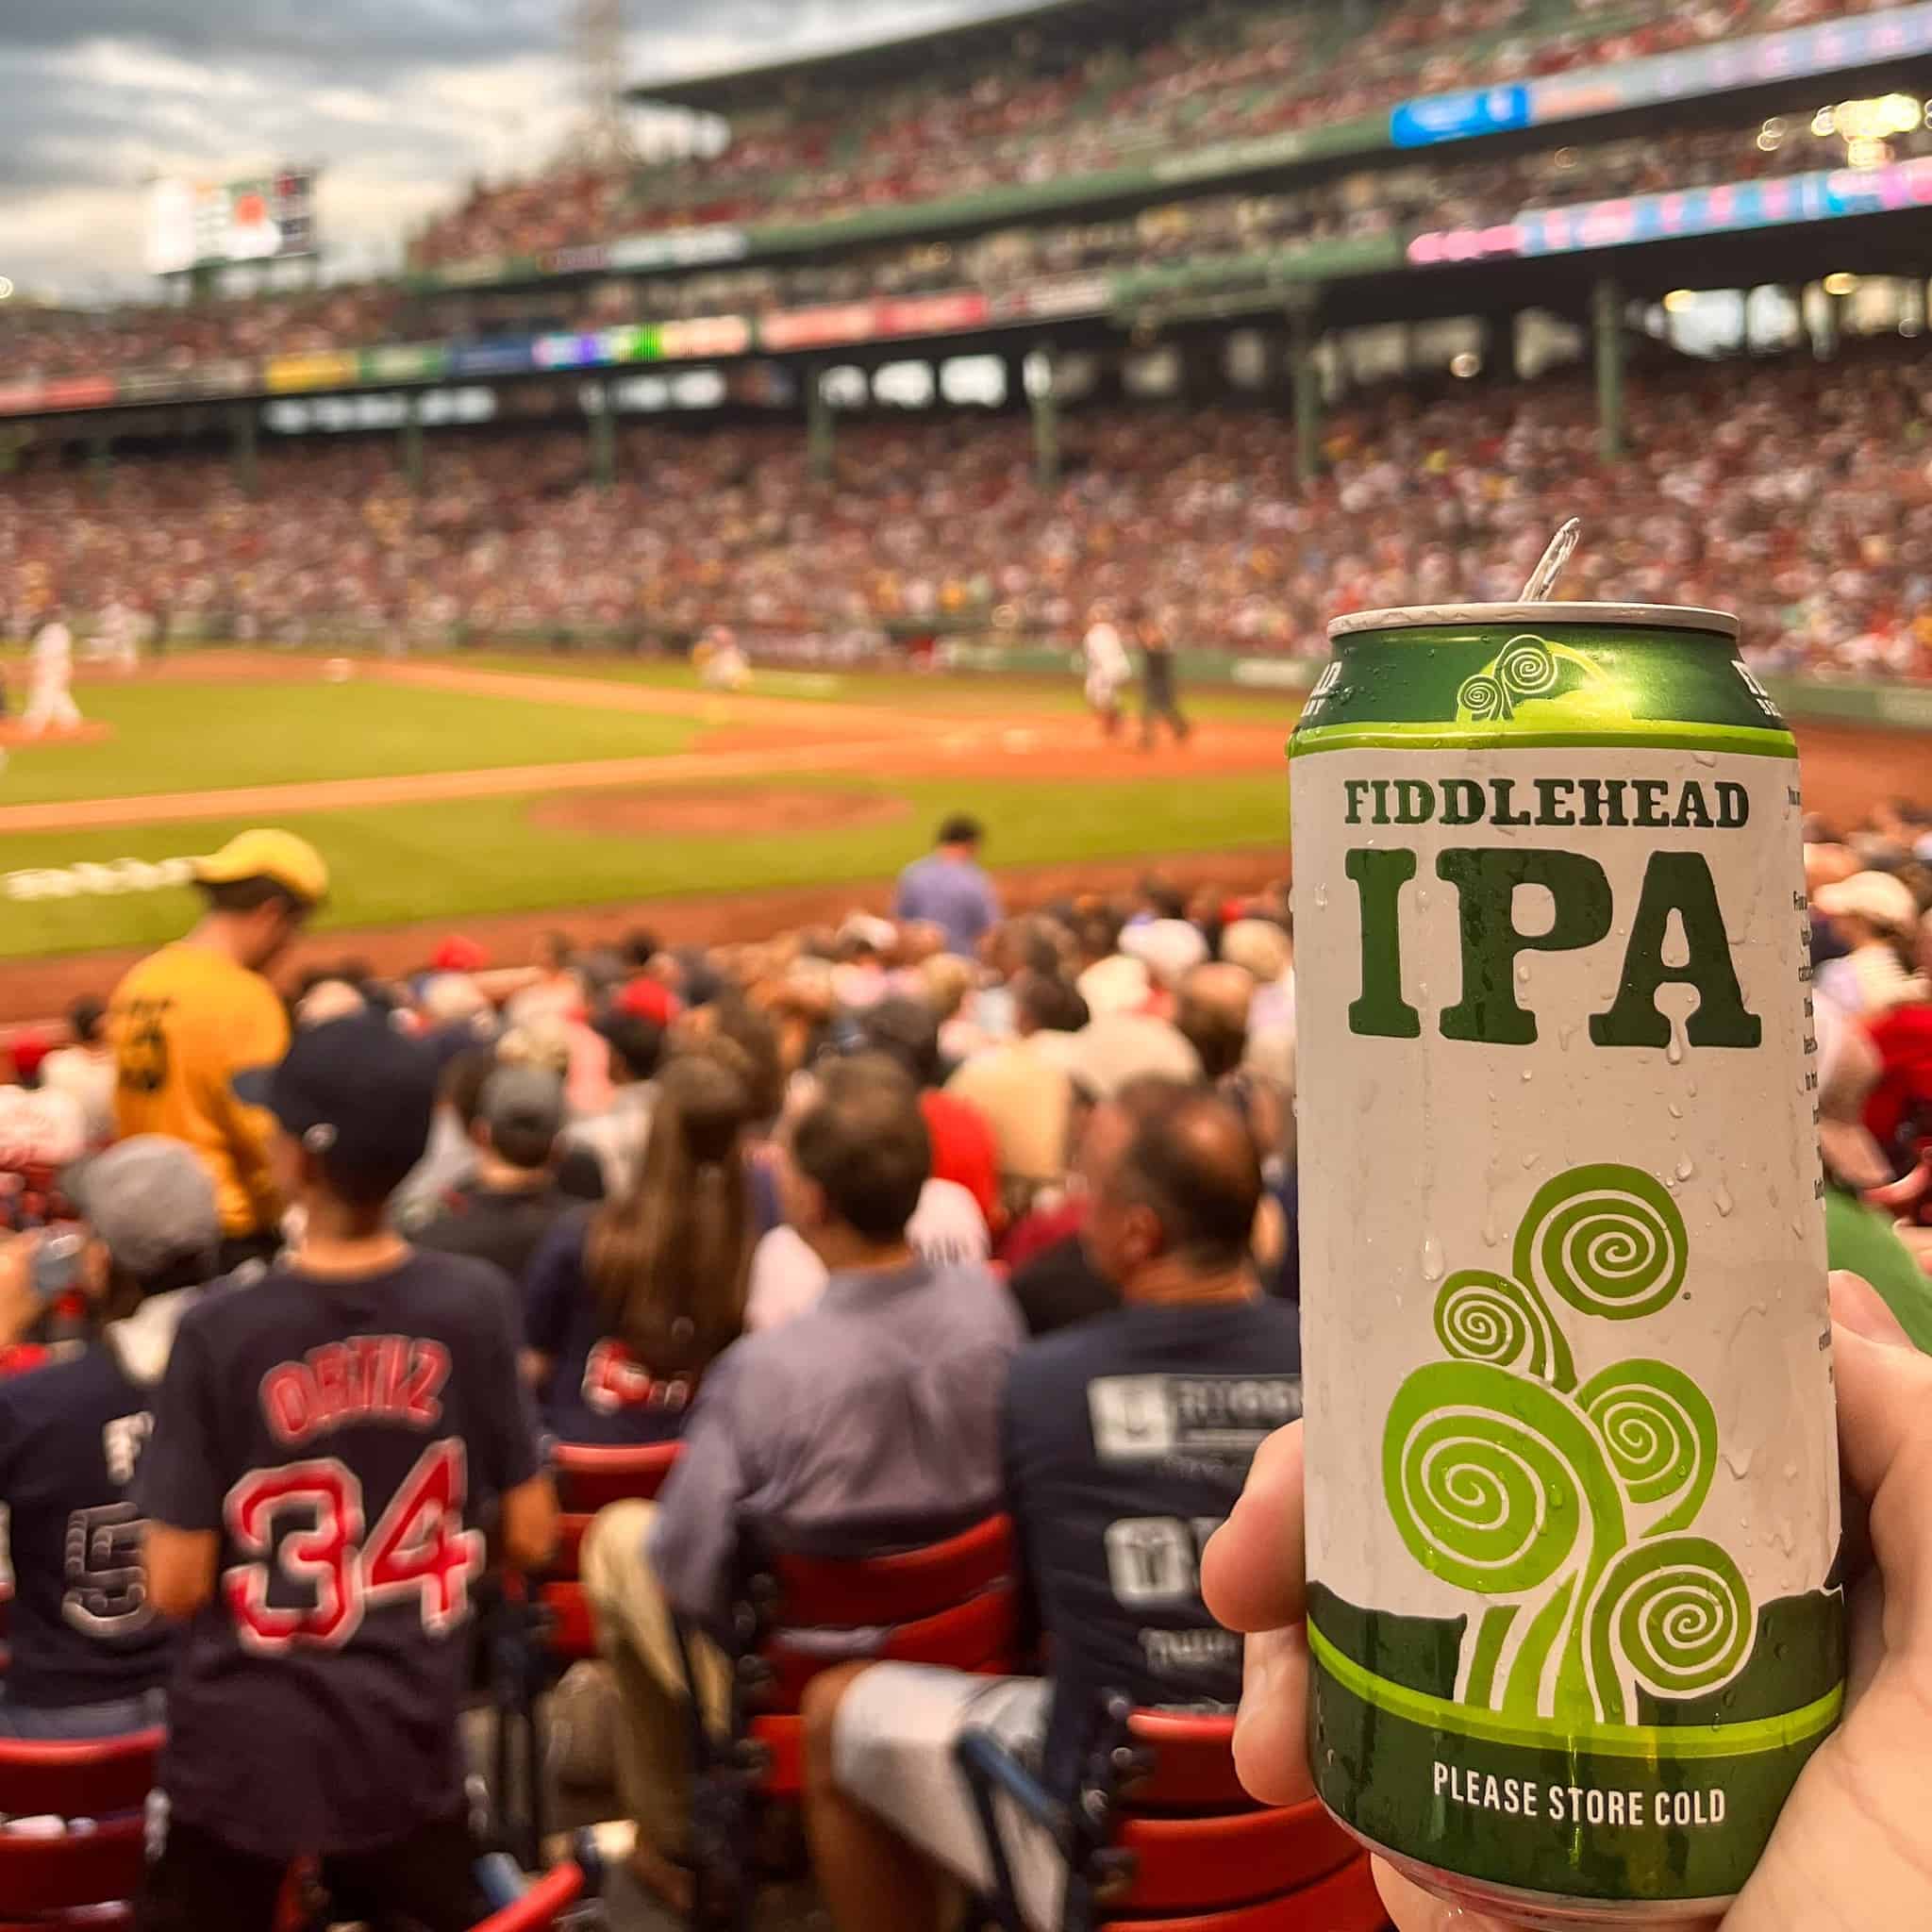 Fiddlehead Brewing Company - IPA at a Baseball Game